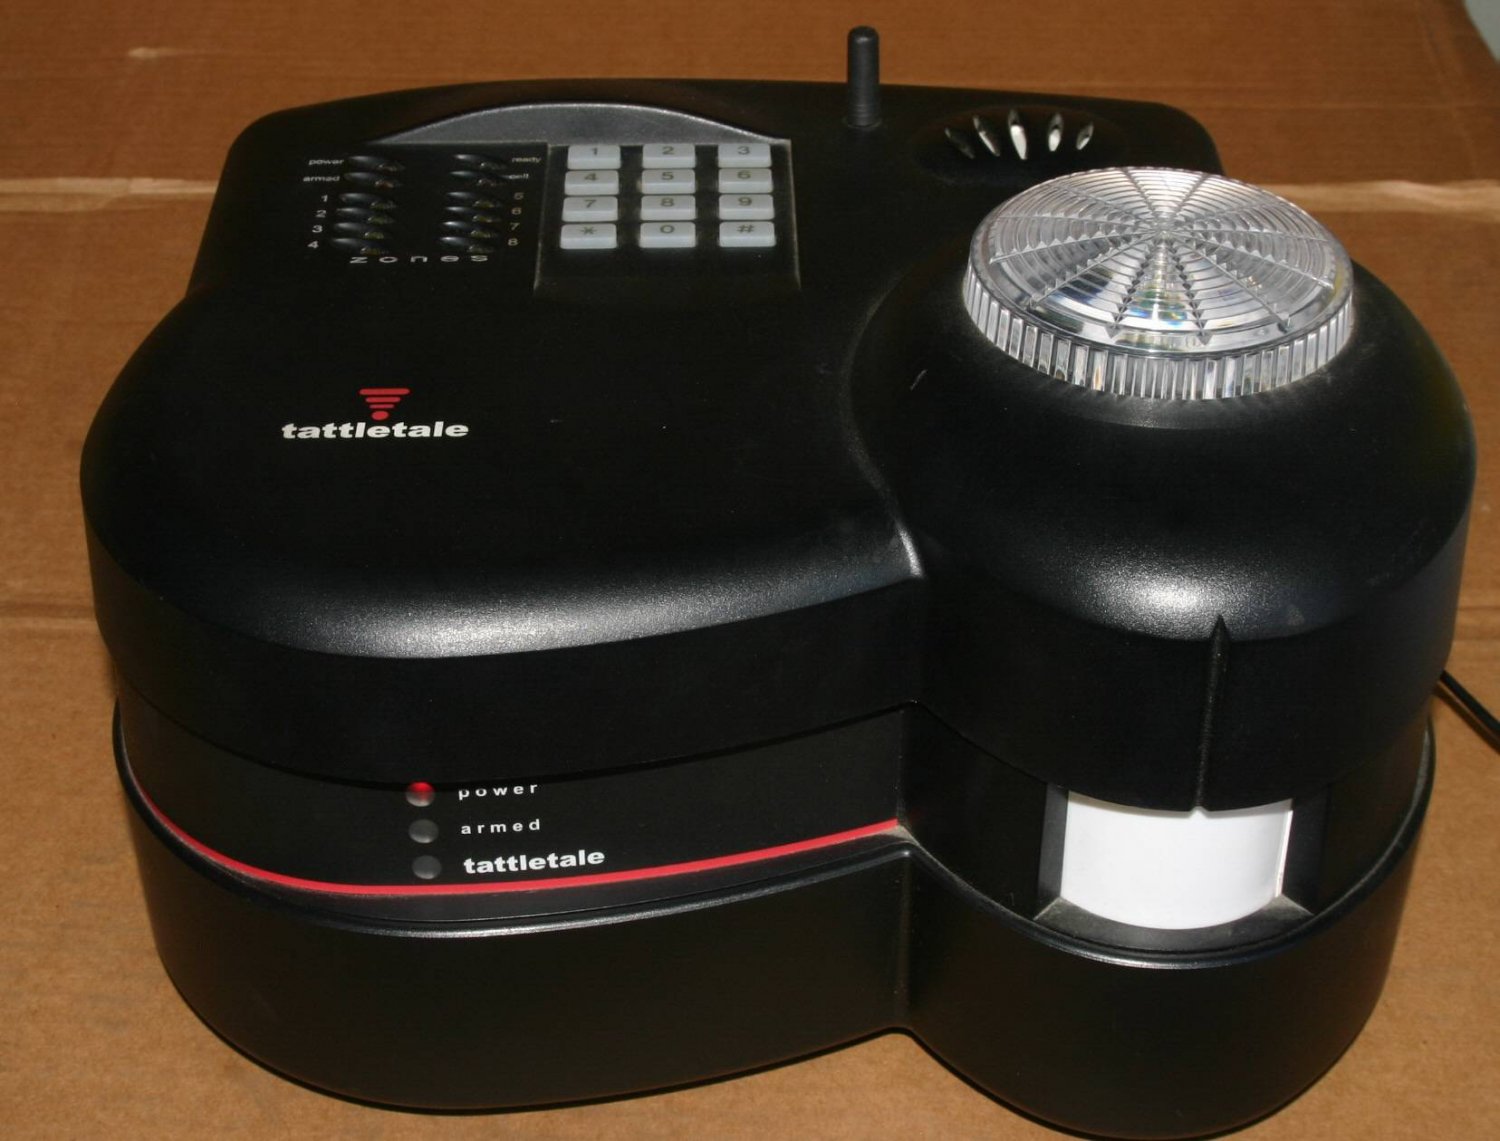 tattletale portable alarm systems